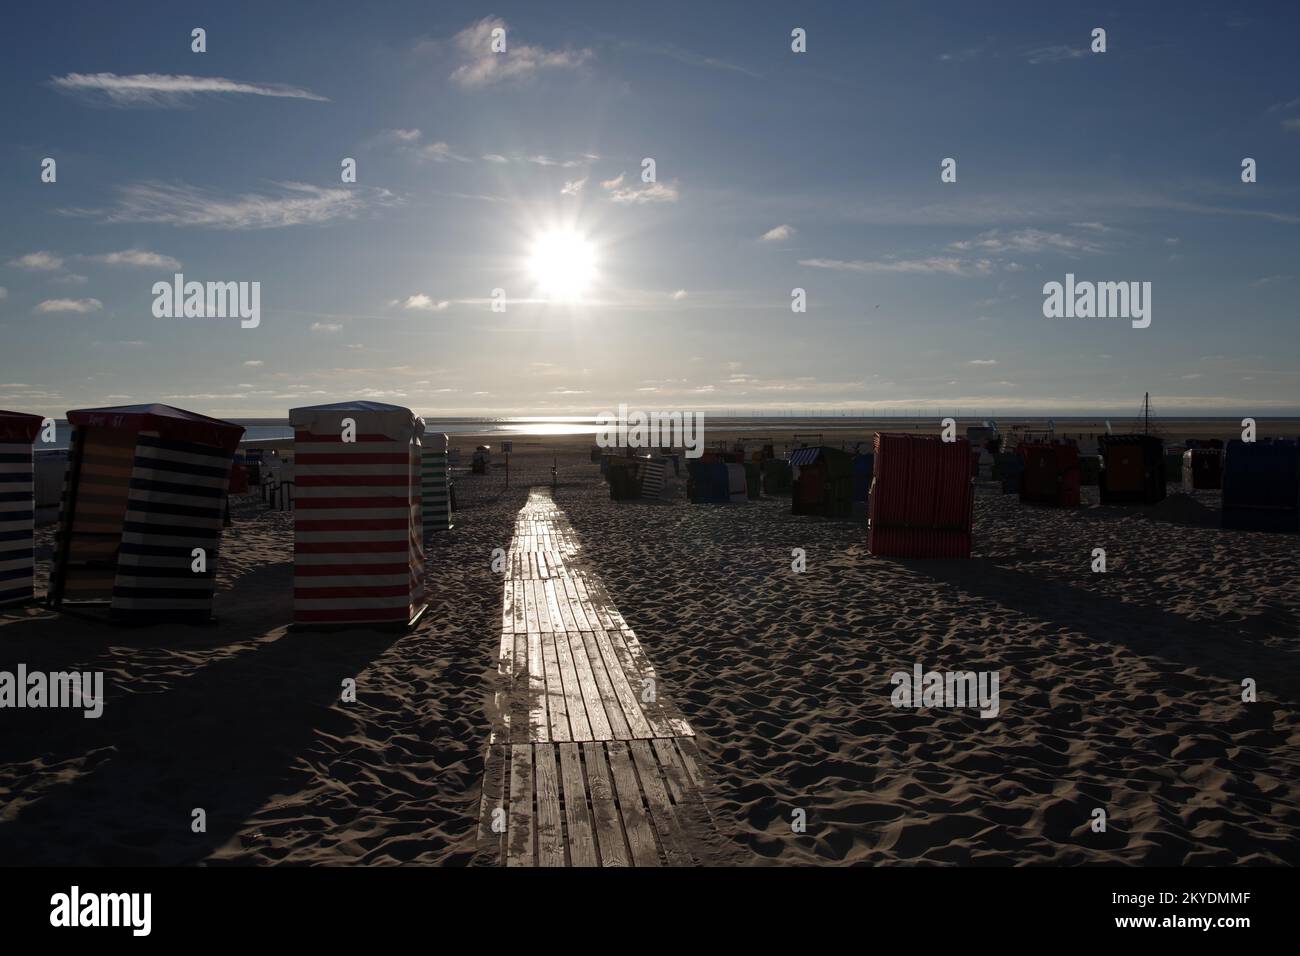 Sand, beach, boards, beach chairs, sky, sun, North Sea, Borkum, Germany, sunset on Borkum beach Stock Photo